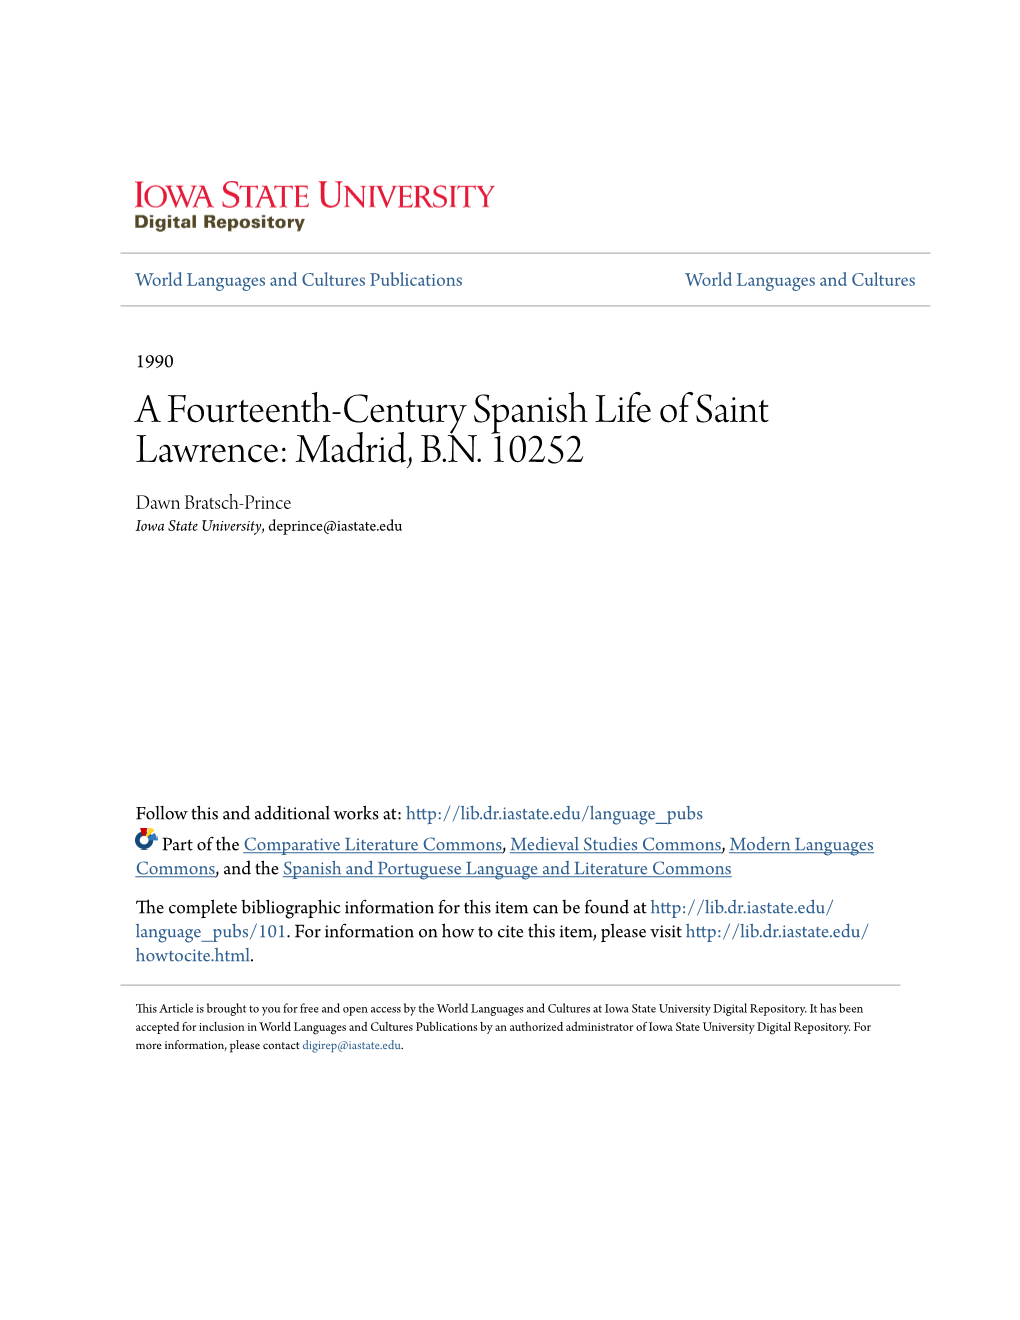 A Fourteenth-Century Spanish Life of Saint Lawrence: Madrid, B.N. 10252 Dawn Bratsch-Prince Iowa State University, Deprince@Iastate.Edu